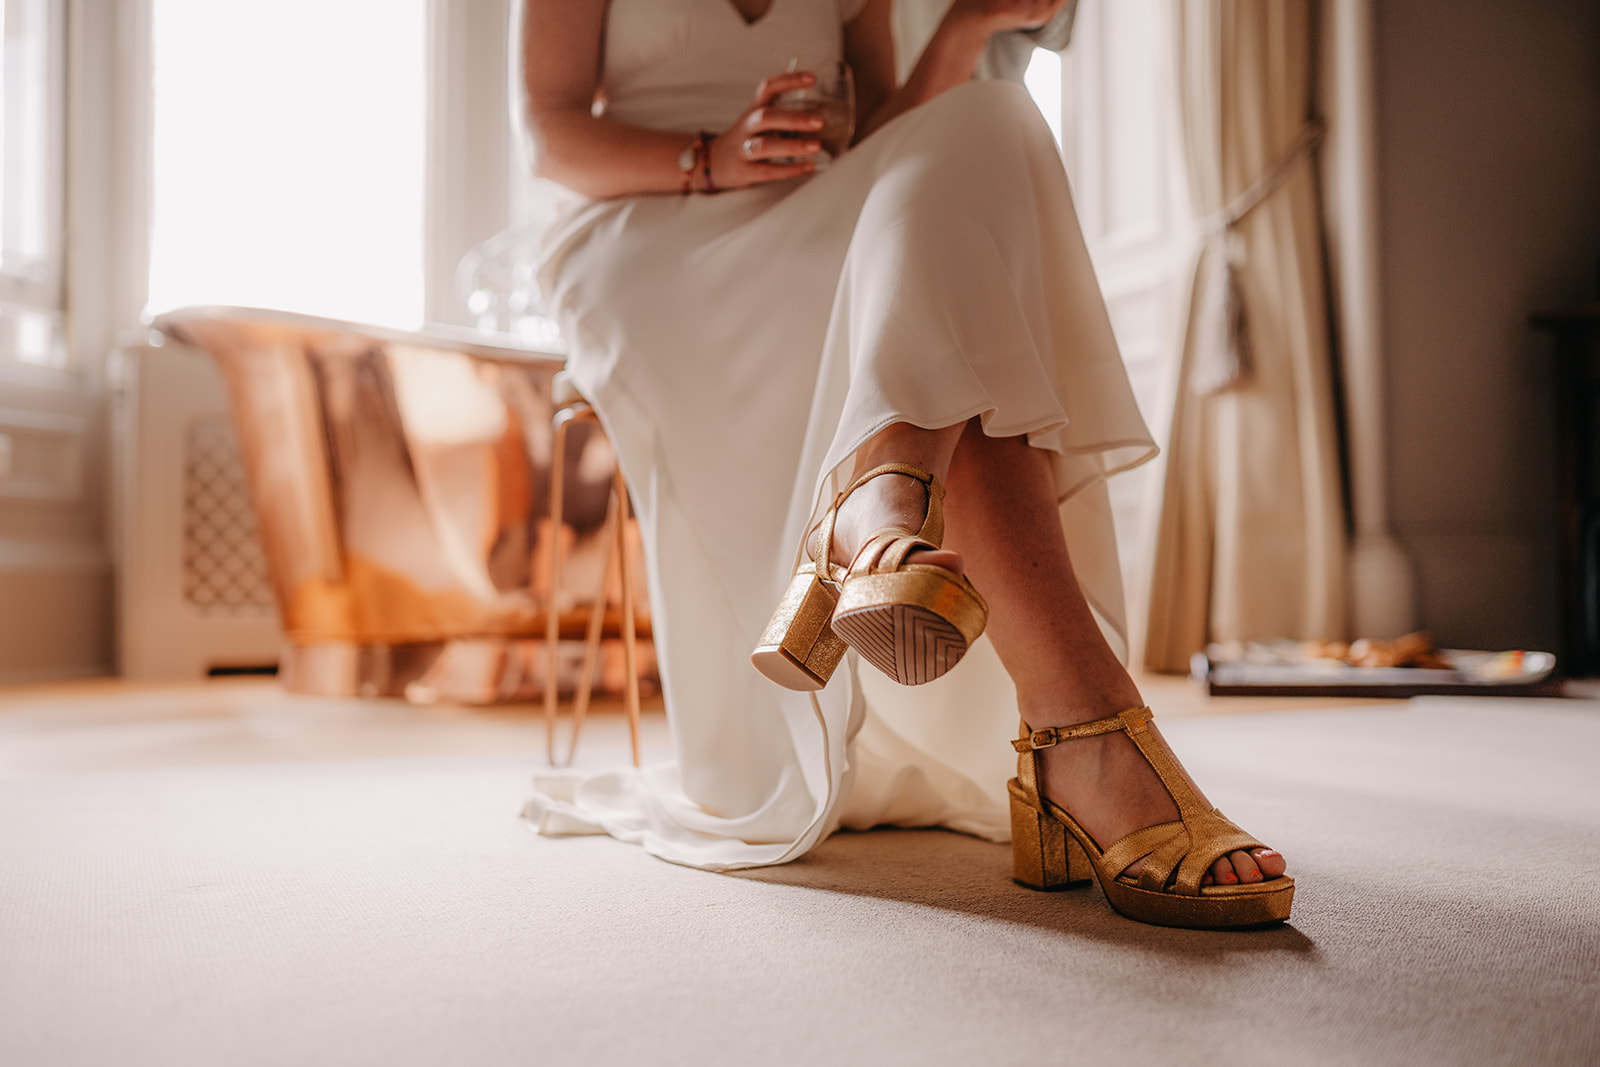 Esska shoes on Brides Feet